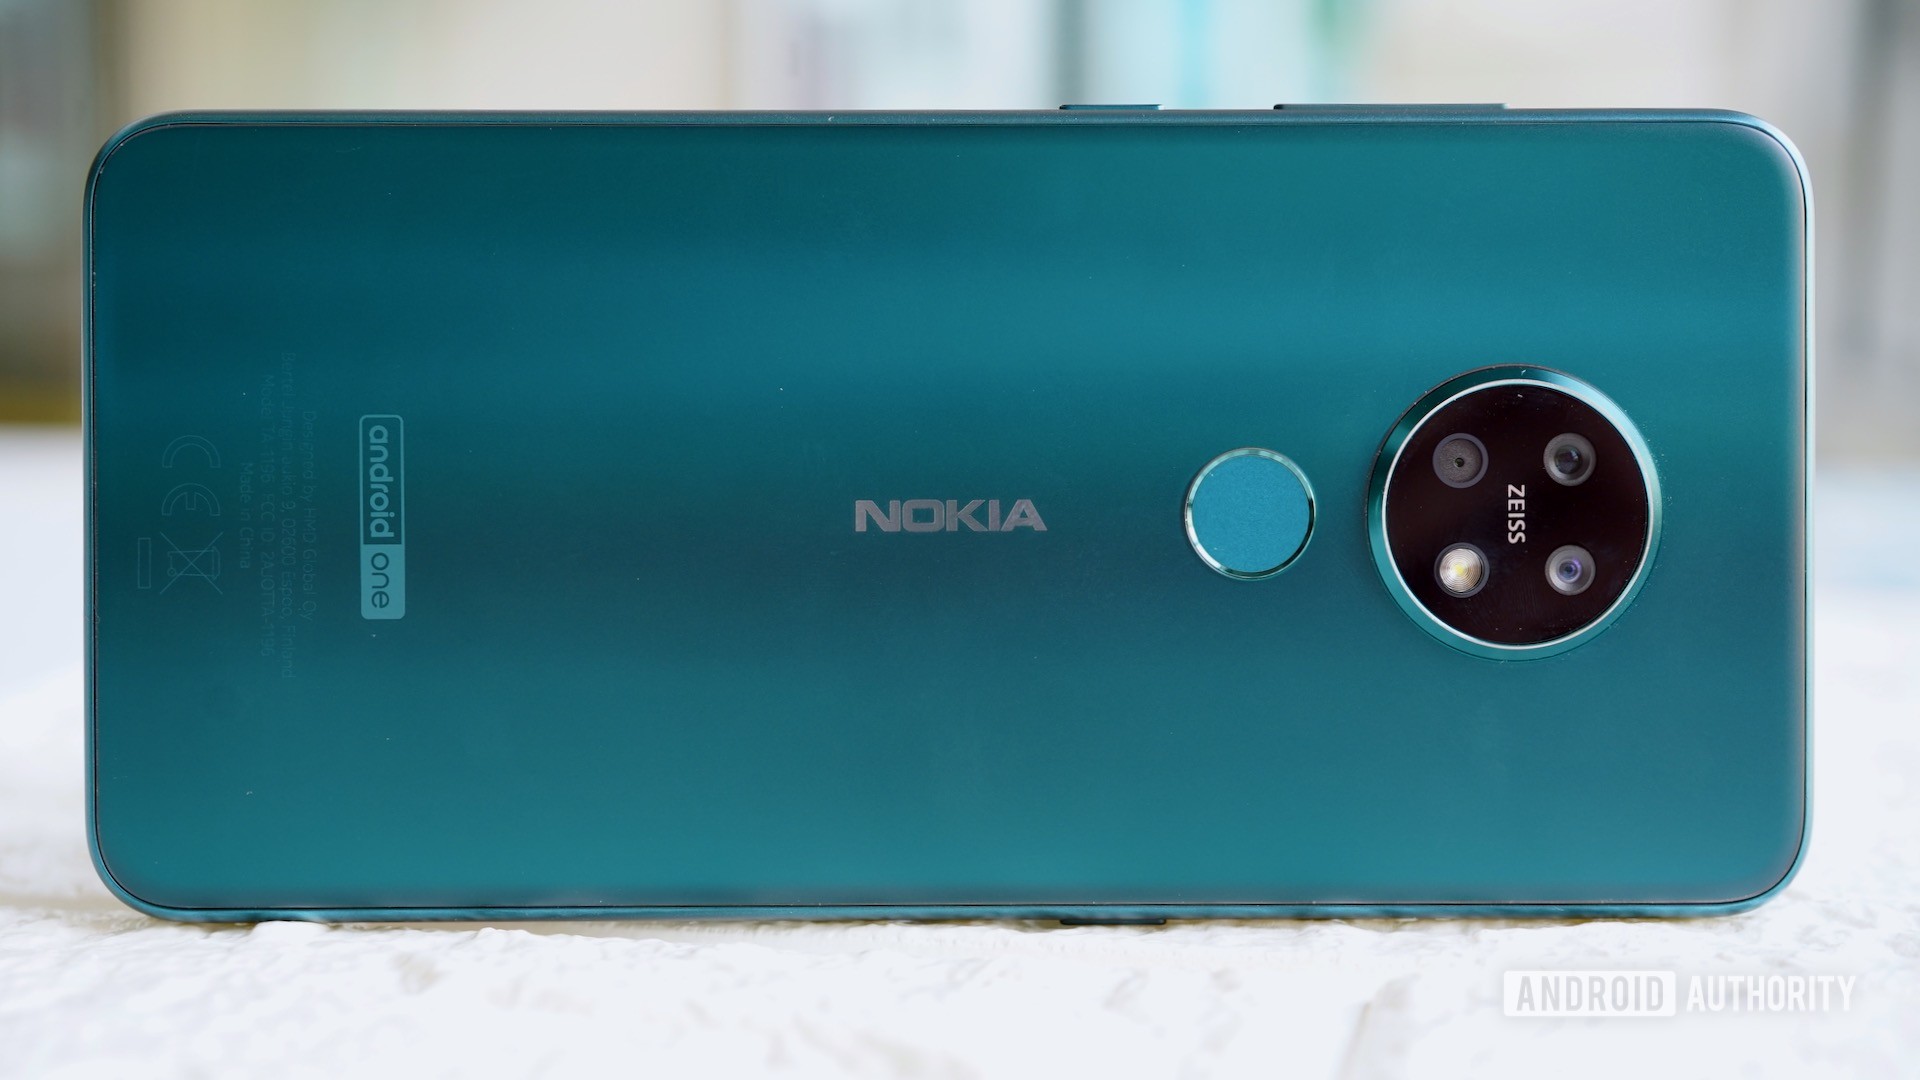 Nokia 7 2 rear panel in aqua